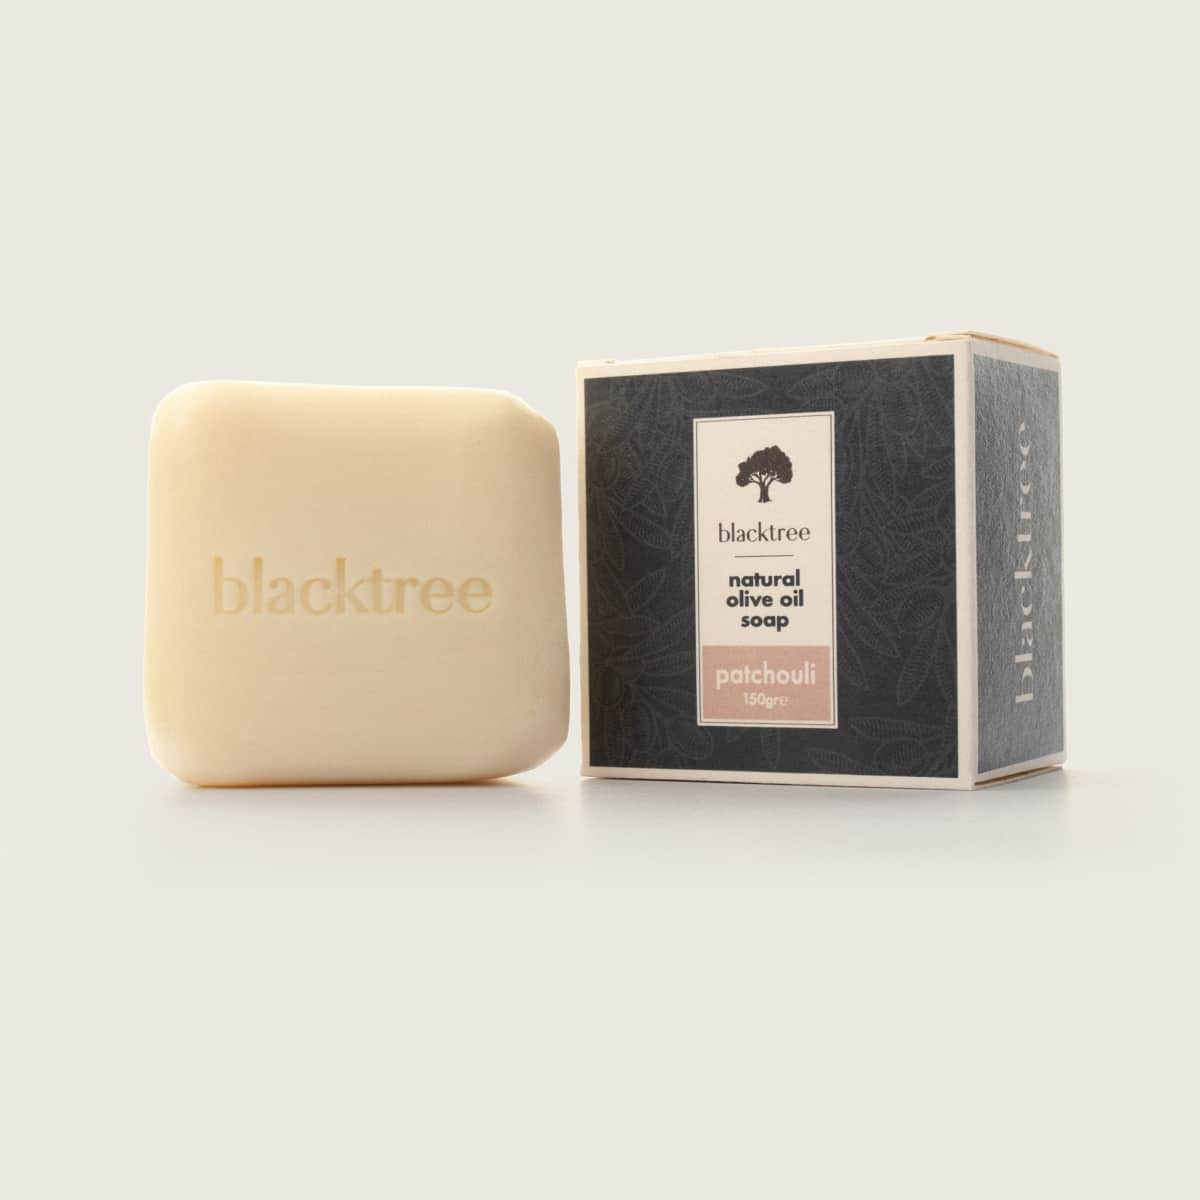 Blacktree Naturals Natural Olive Oil Soap - Patchouli